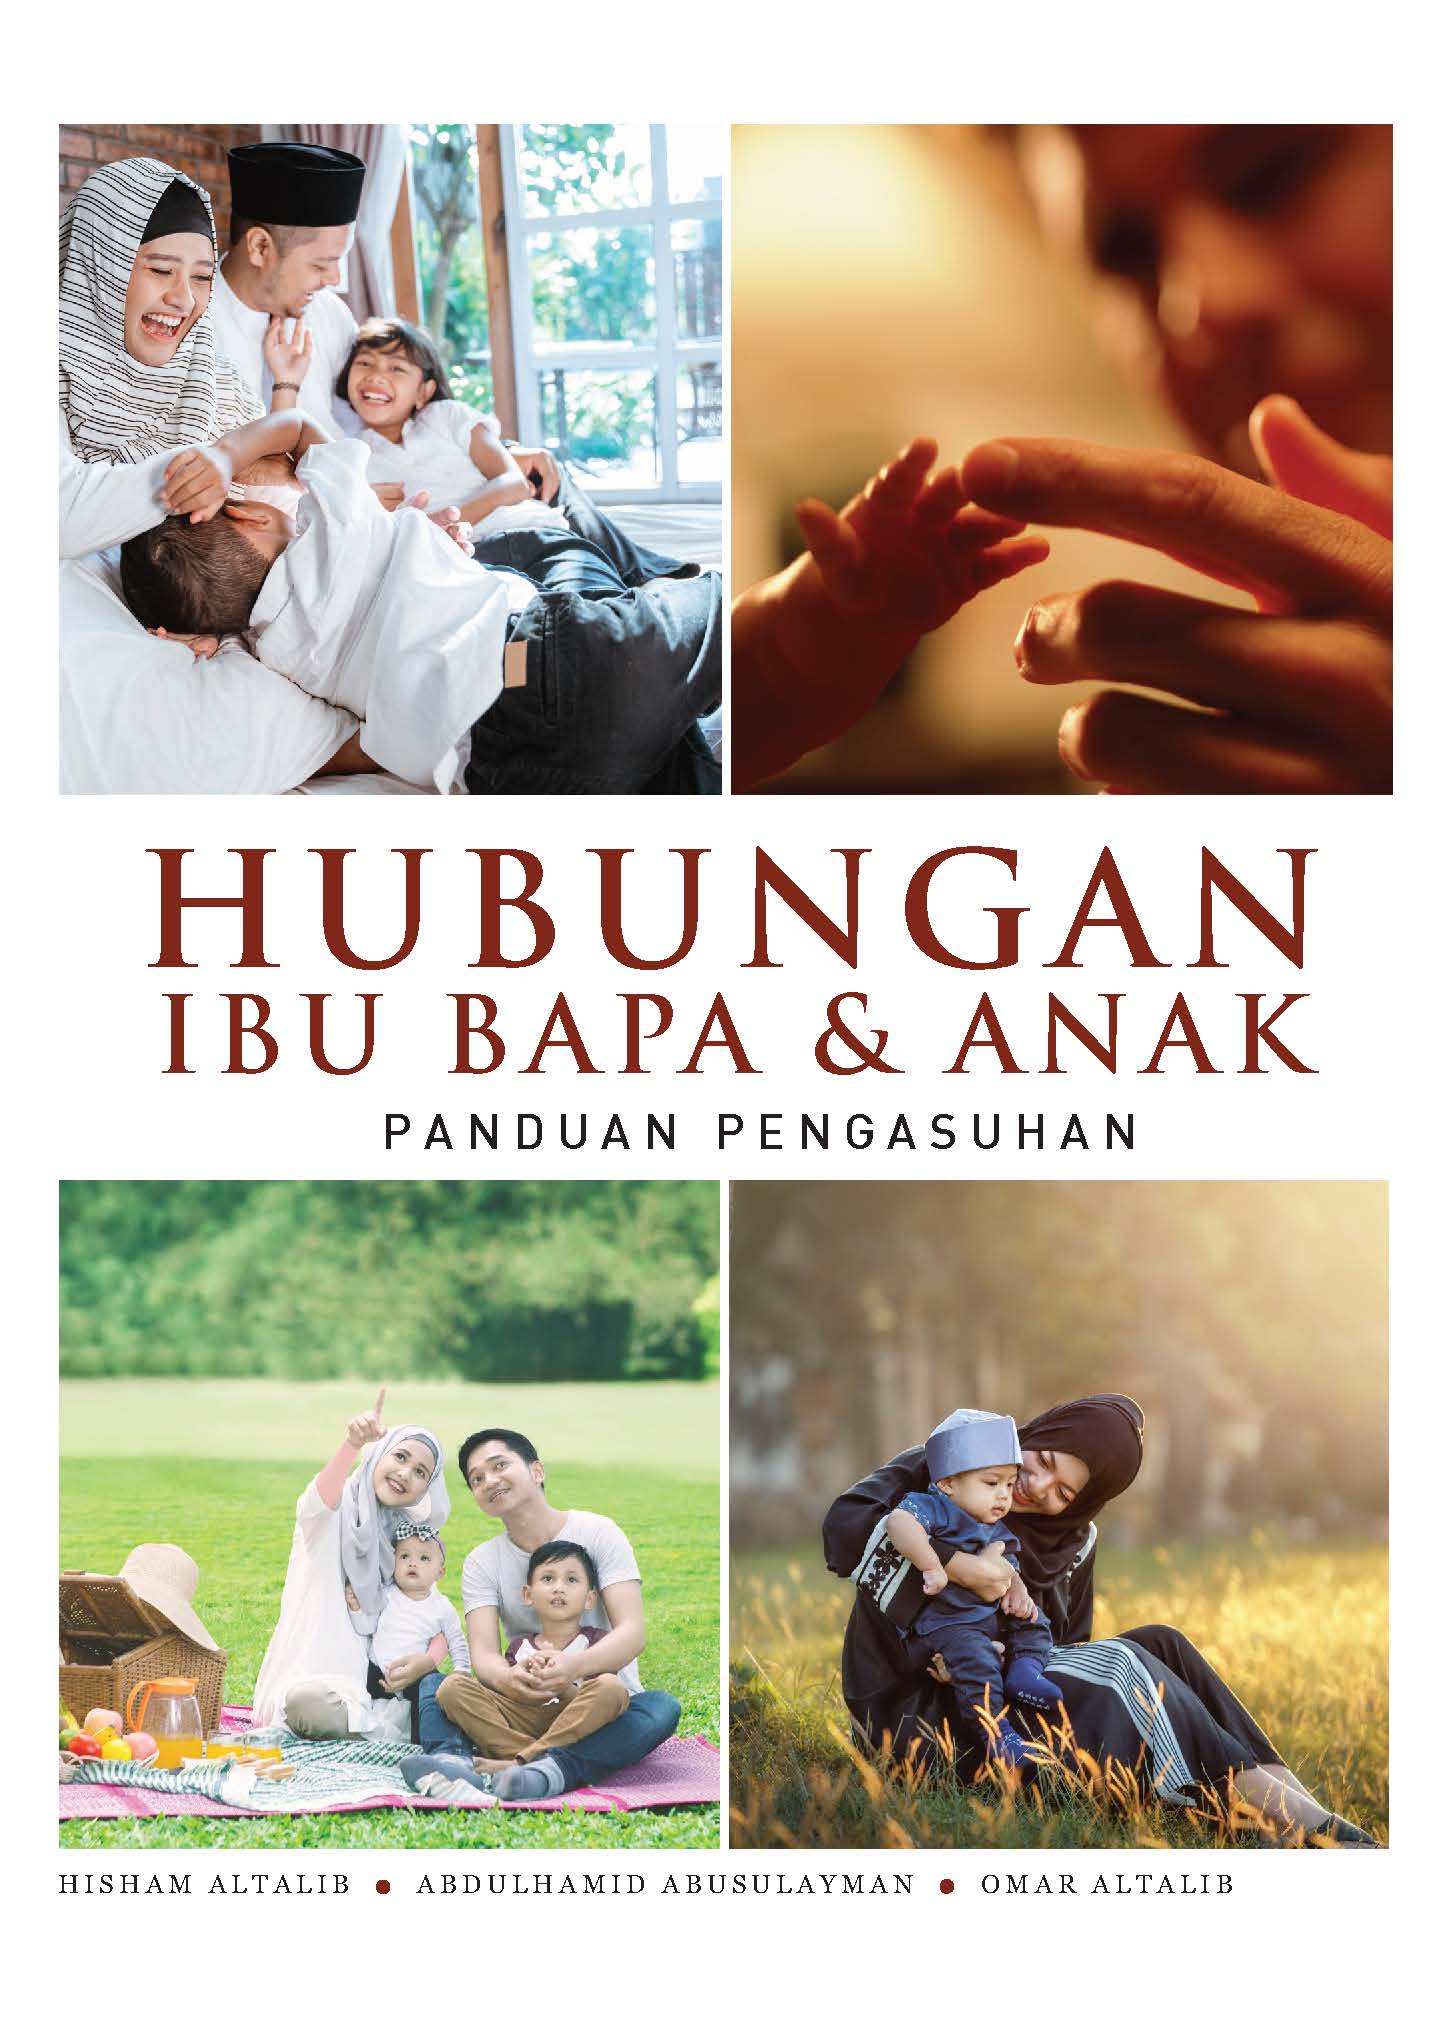 Malay: Hubungan Ibu Bapa & Anak: Panduan Pengasuhan (Parent-Child Relations: A Guide to Raising Children)